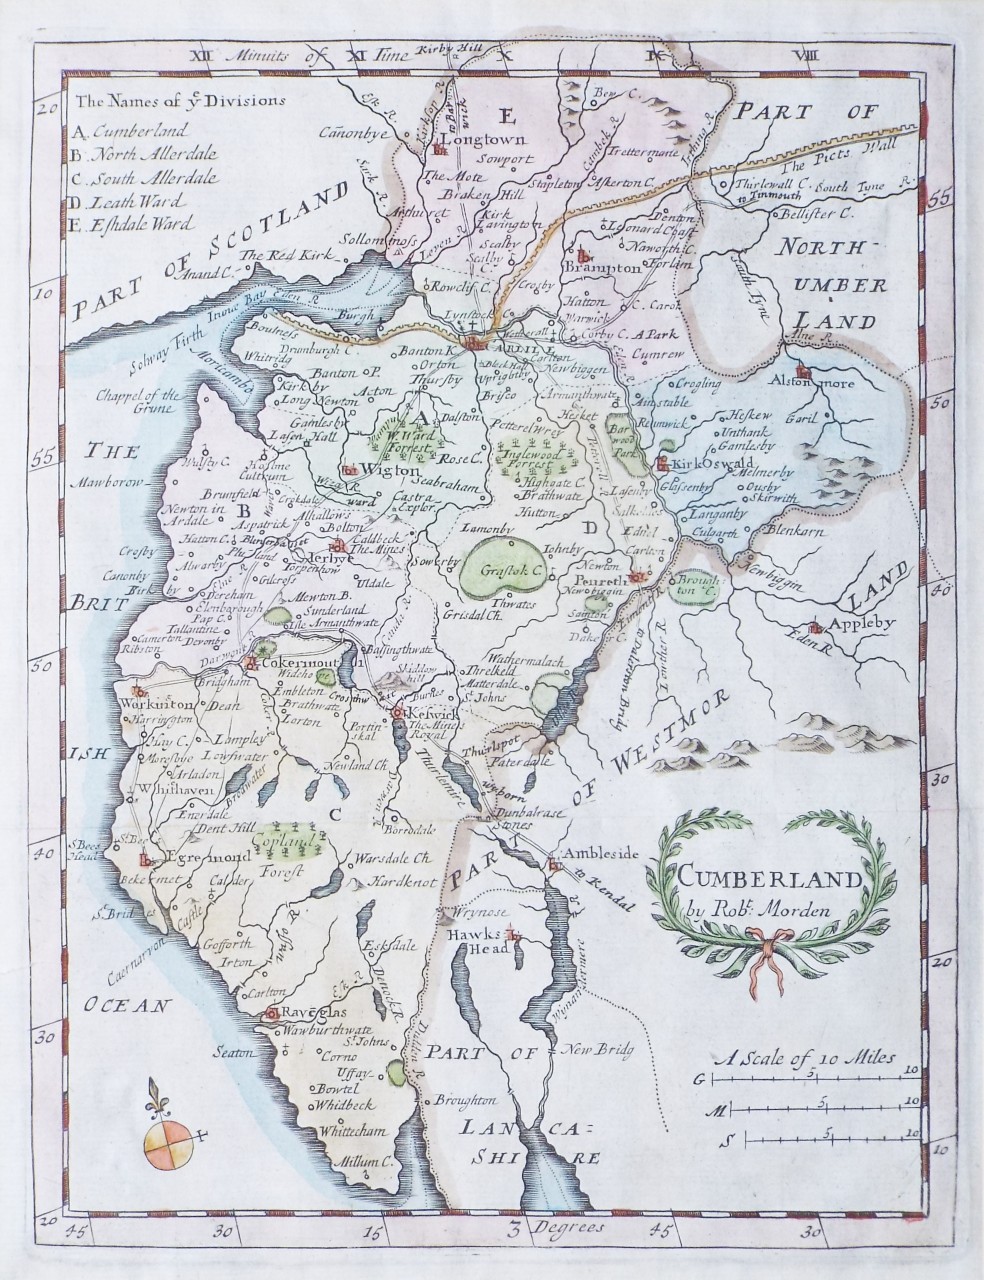 Map of Cumberland